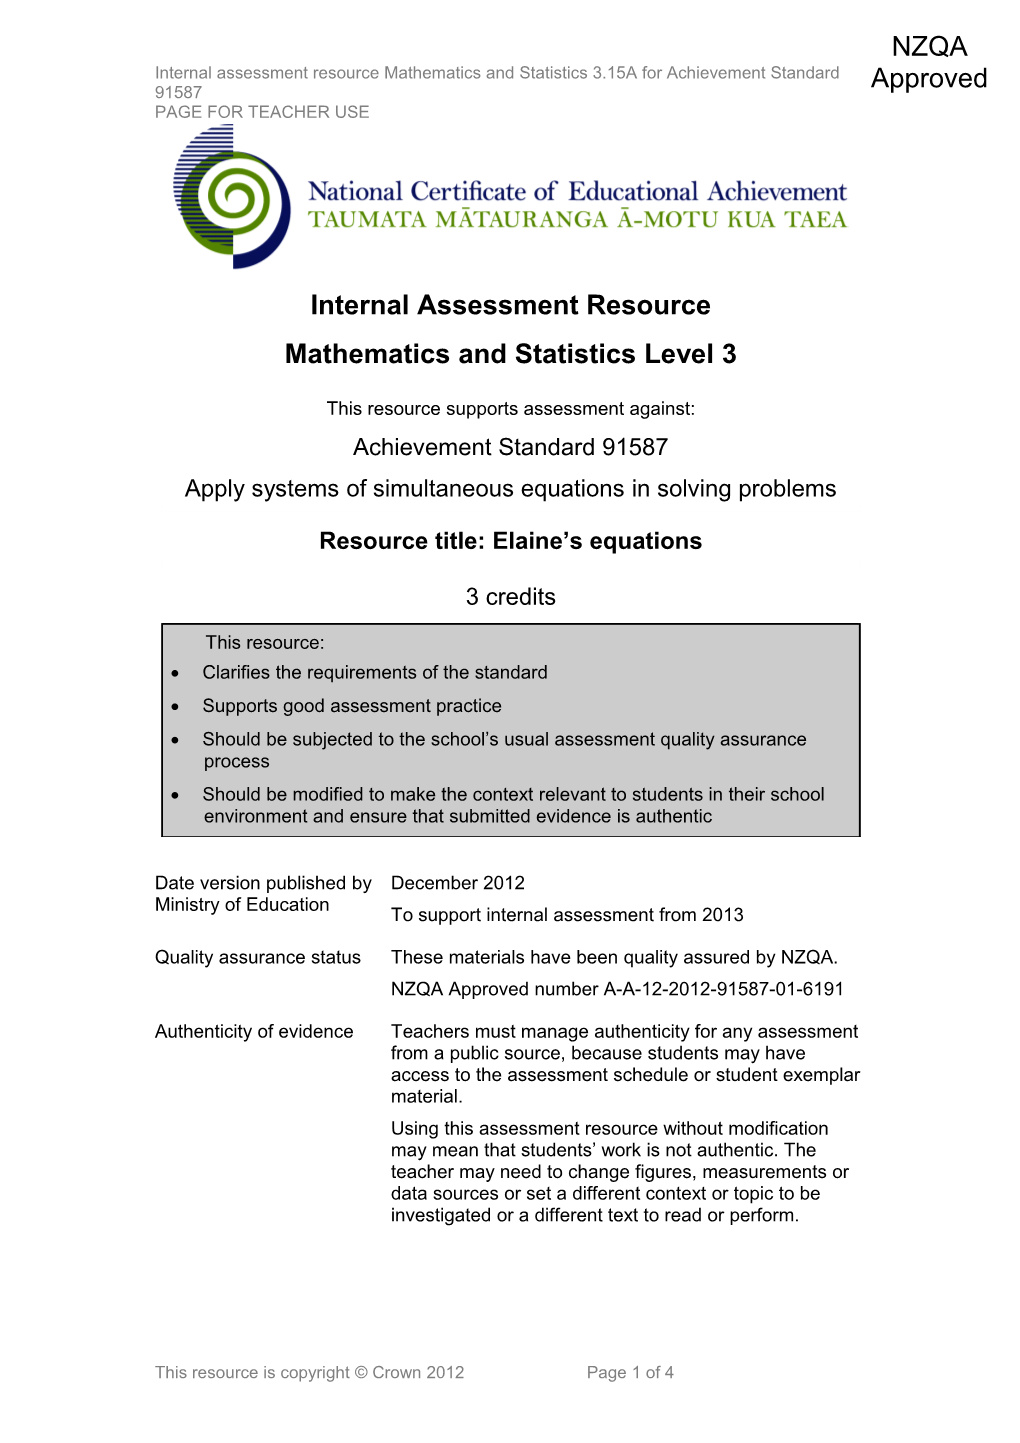 Level 3 Mathematics and Statistics Internal Assessment Resource